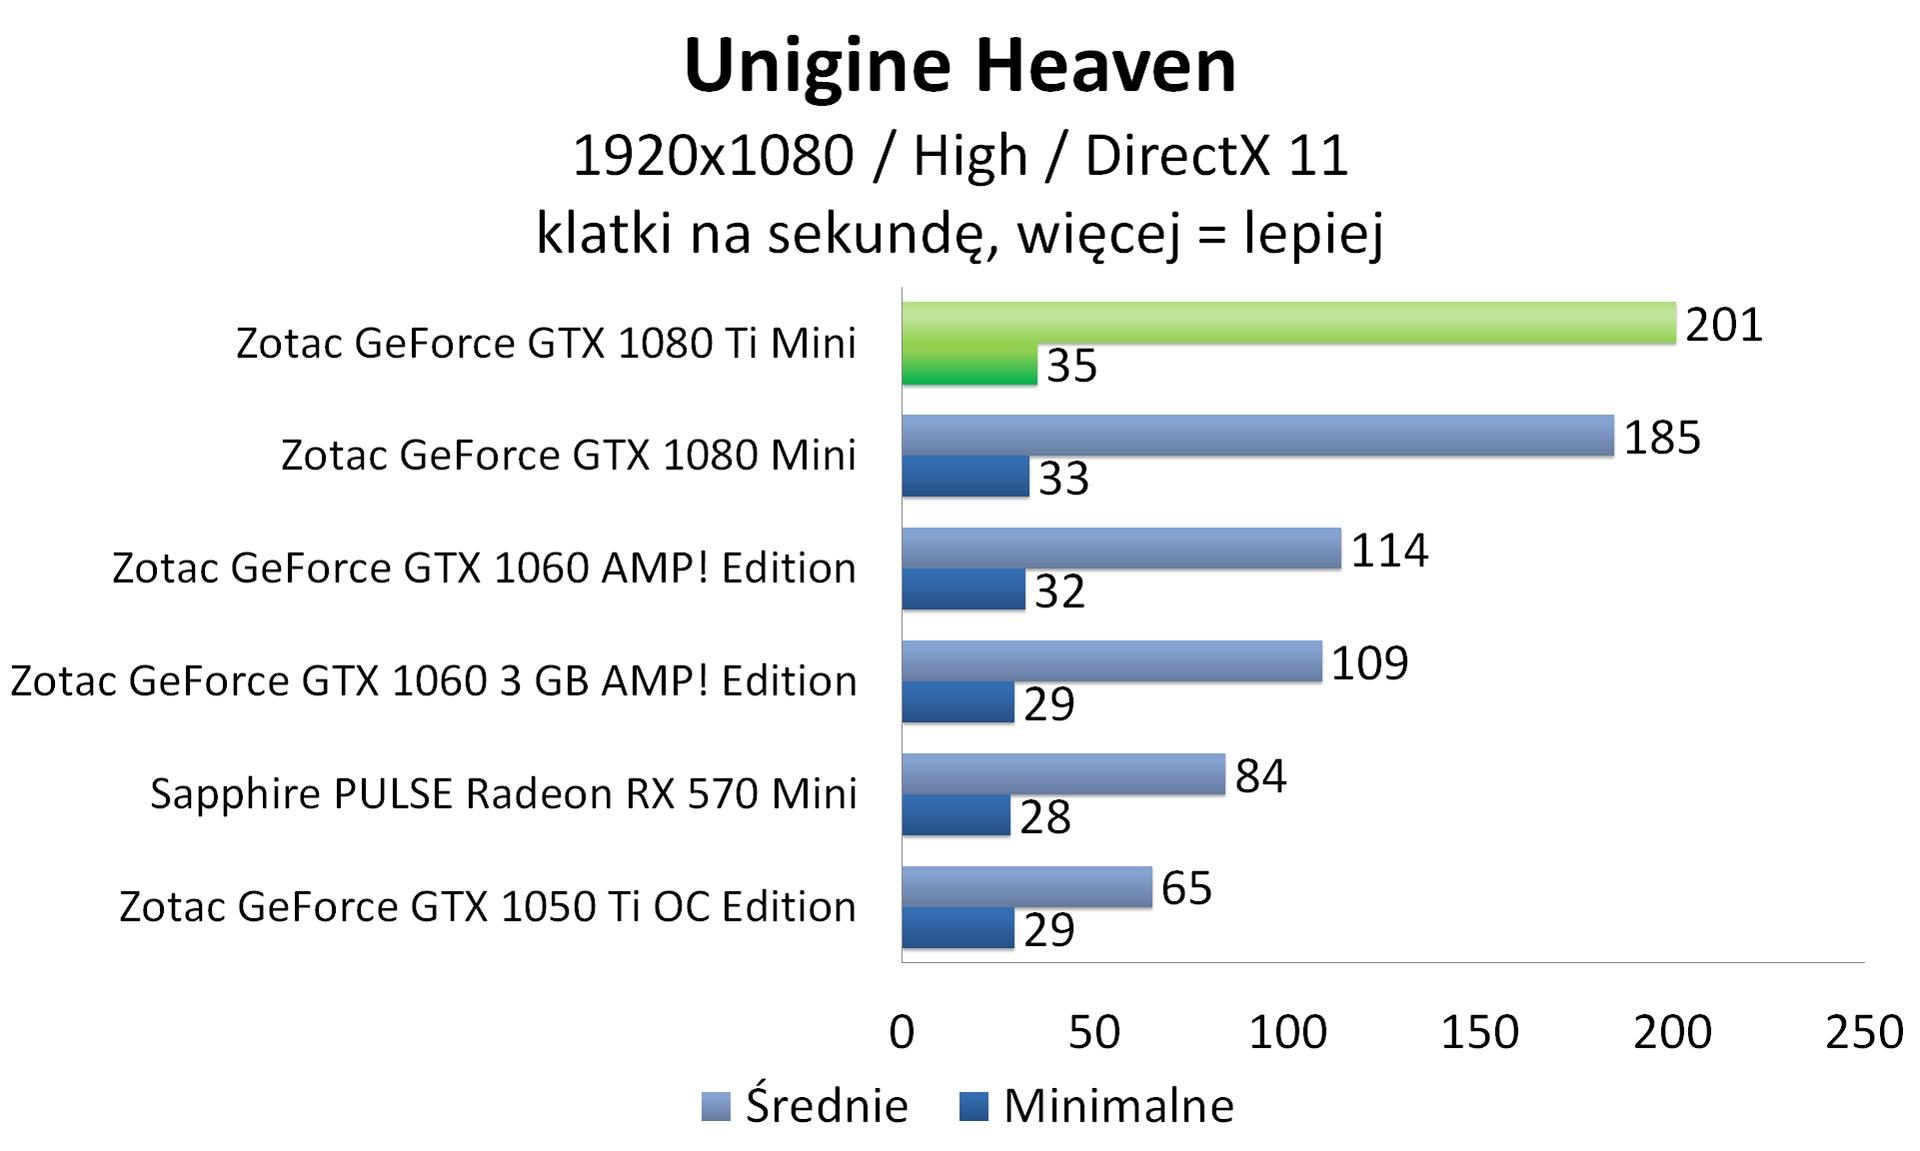 ZOTAC GeForce GTX 1080 Ti Mini - Unigine Heaven